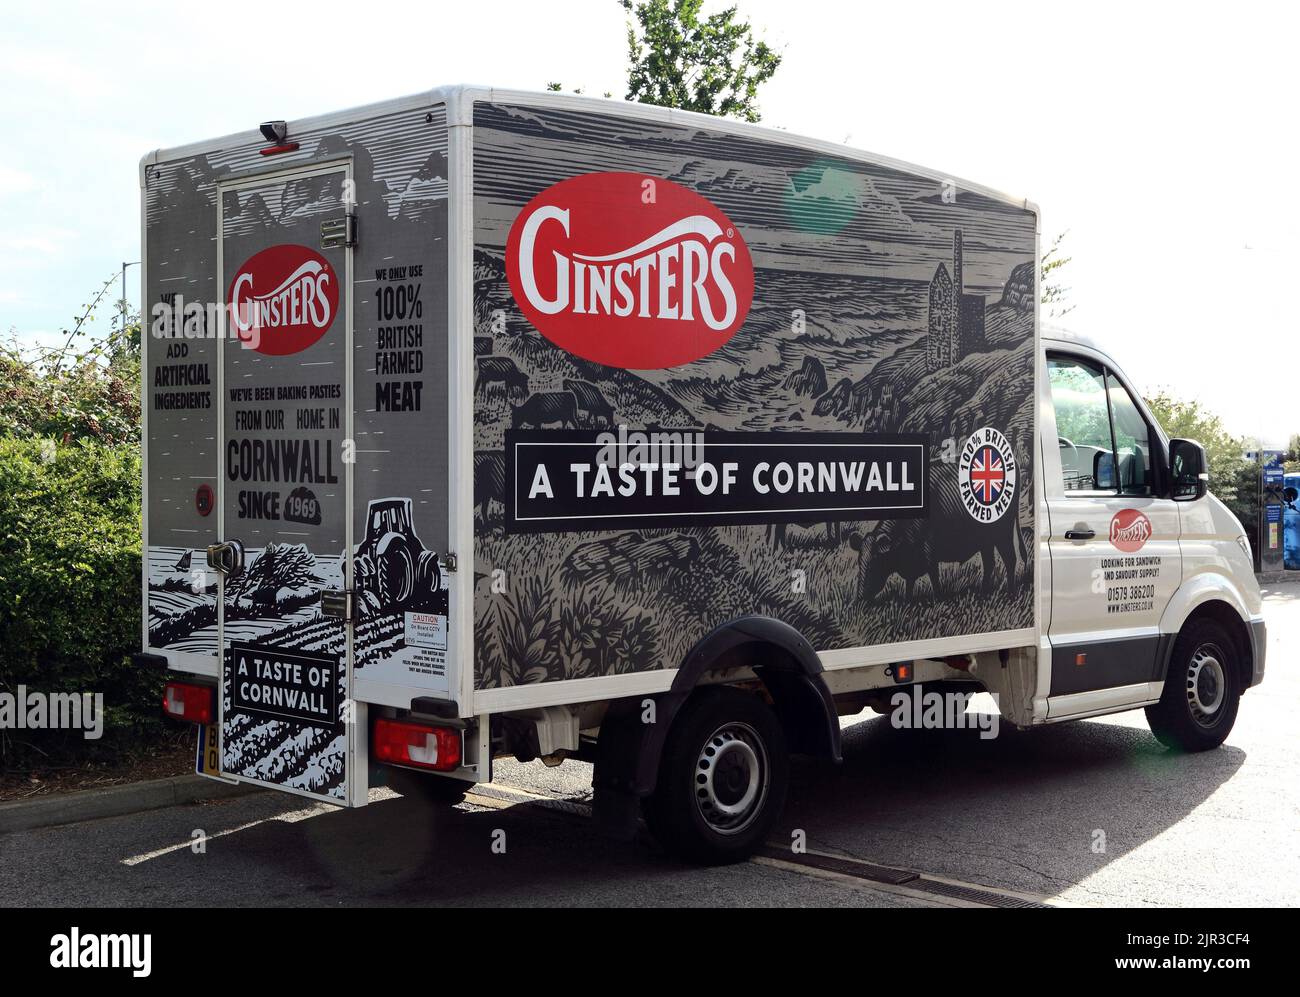 Ginsters, Taste of Cornwall, véhicule de livraison, fourgonnette, nourriture, Angleterre, Royaume-Uni Banque D'Images